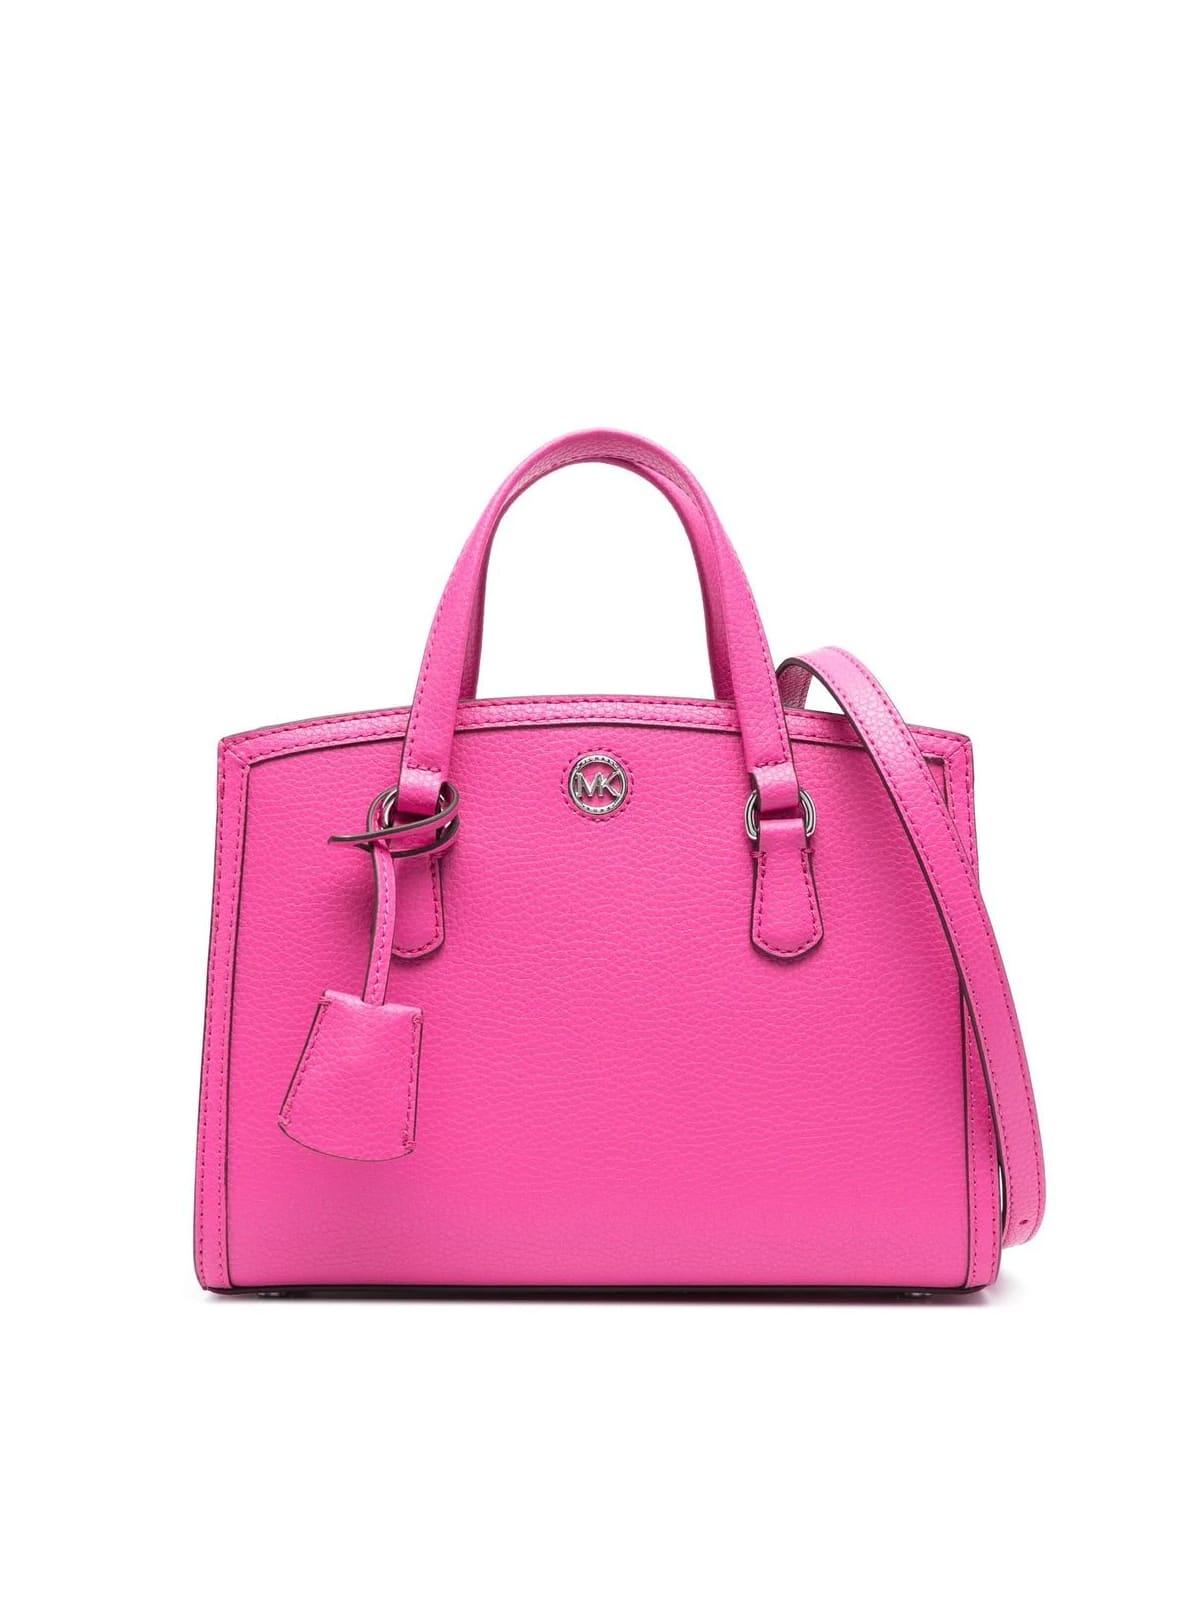 MICHAEL Michael Kors Sm Msgr Bag in Pink | Lyst